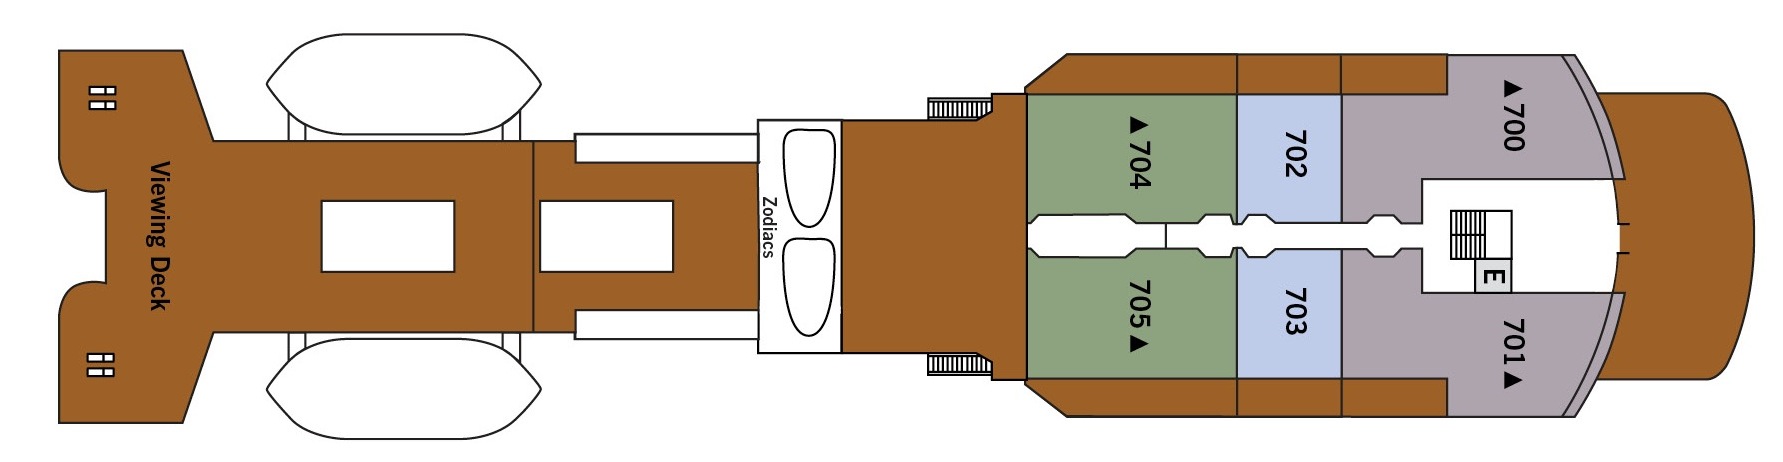 Silver Explorer-deckplan-Deck 7 